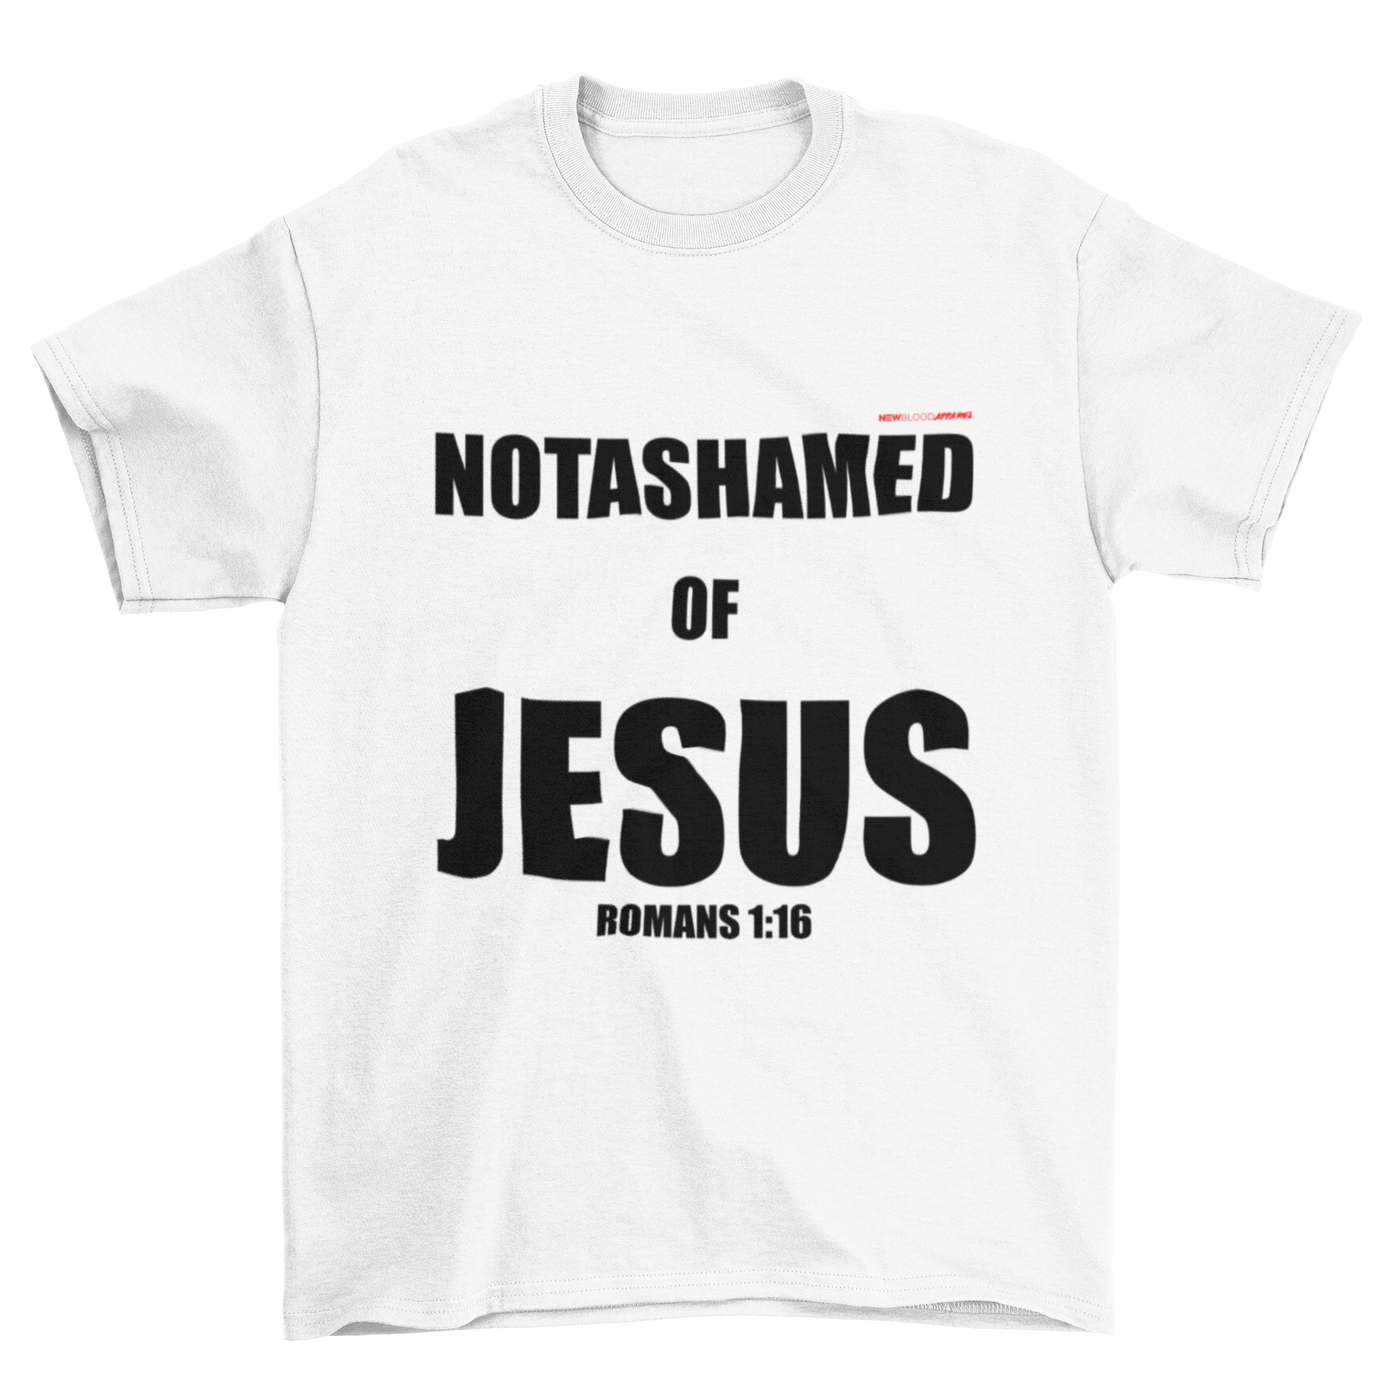 NOTASHAMED OF JESUS - T-Shirt